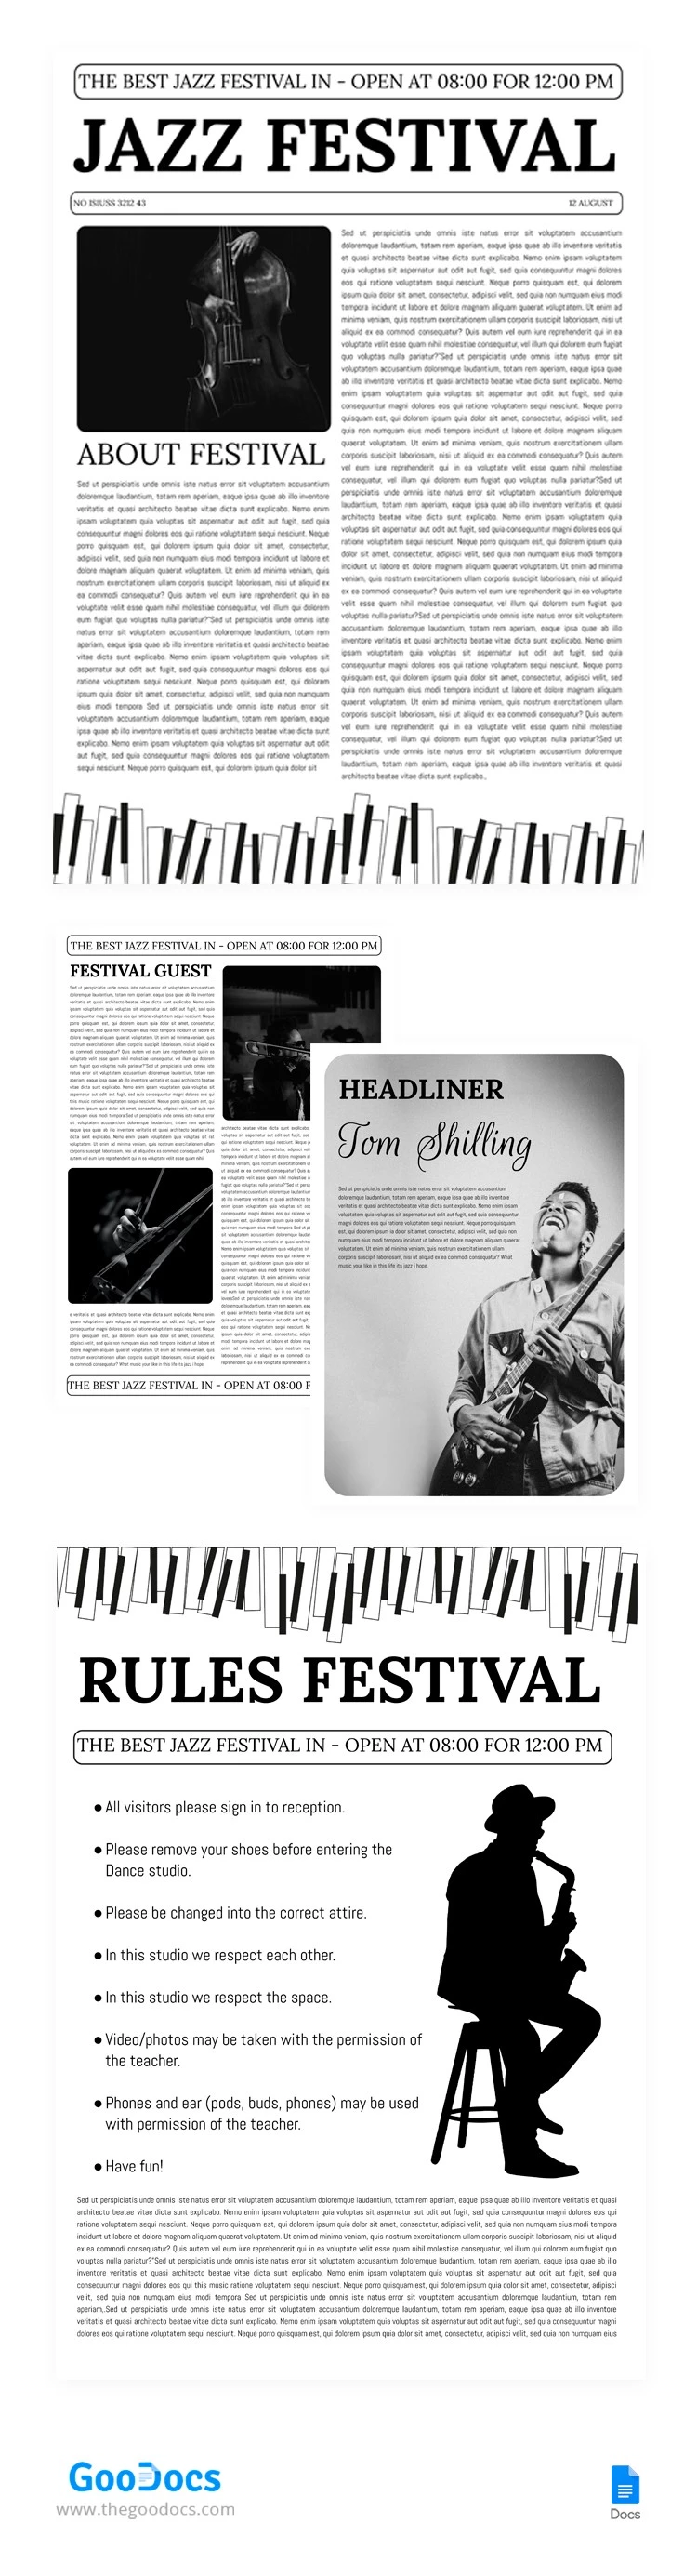 Journal du Festival de Jazz - free Google Docs Template - 10065741